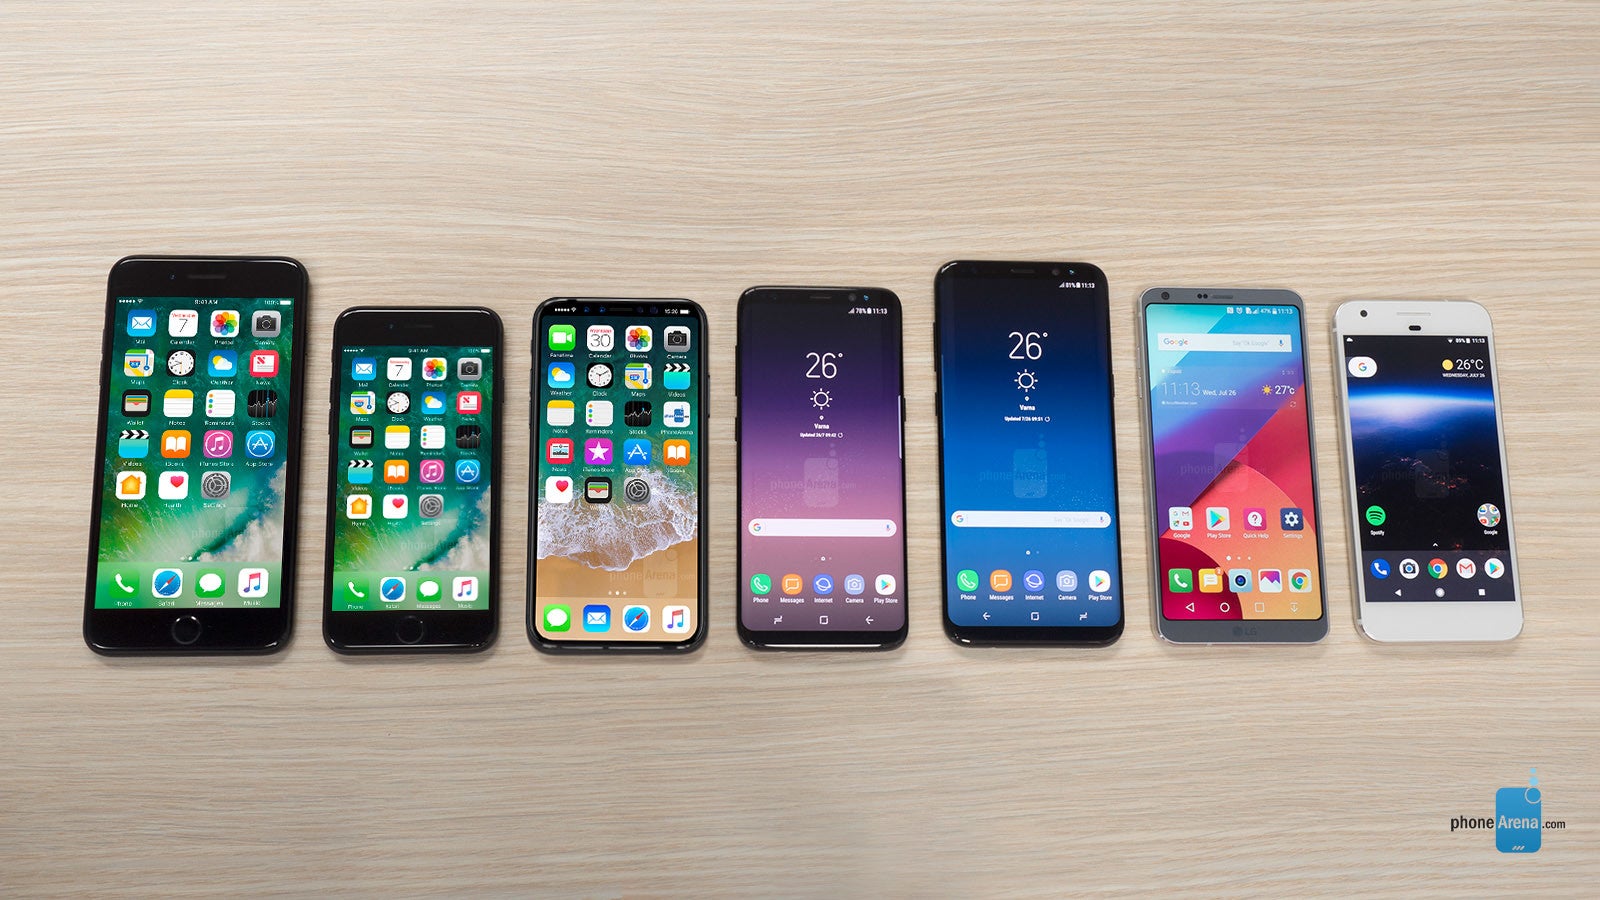 iPhone 8 vs iPhone 7/7Plus, Galaxy S8/S8+, LG G6, Google Pixel: size comparison